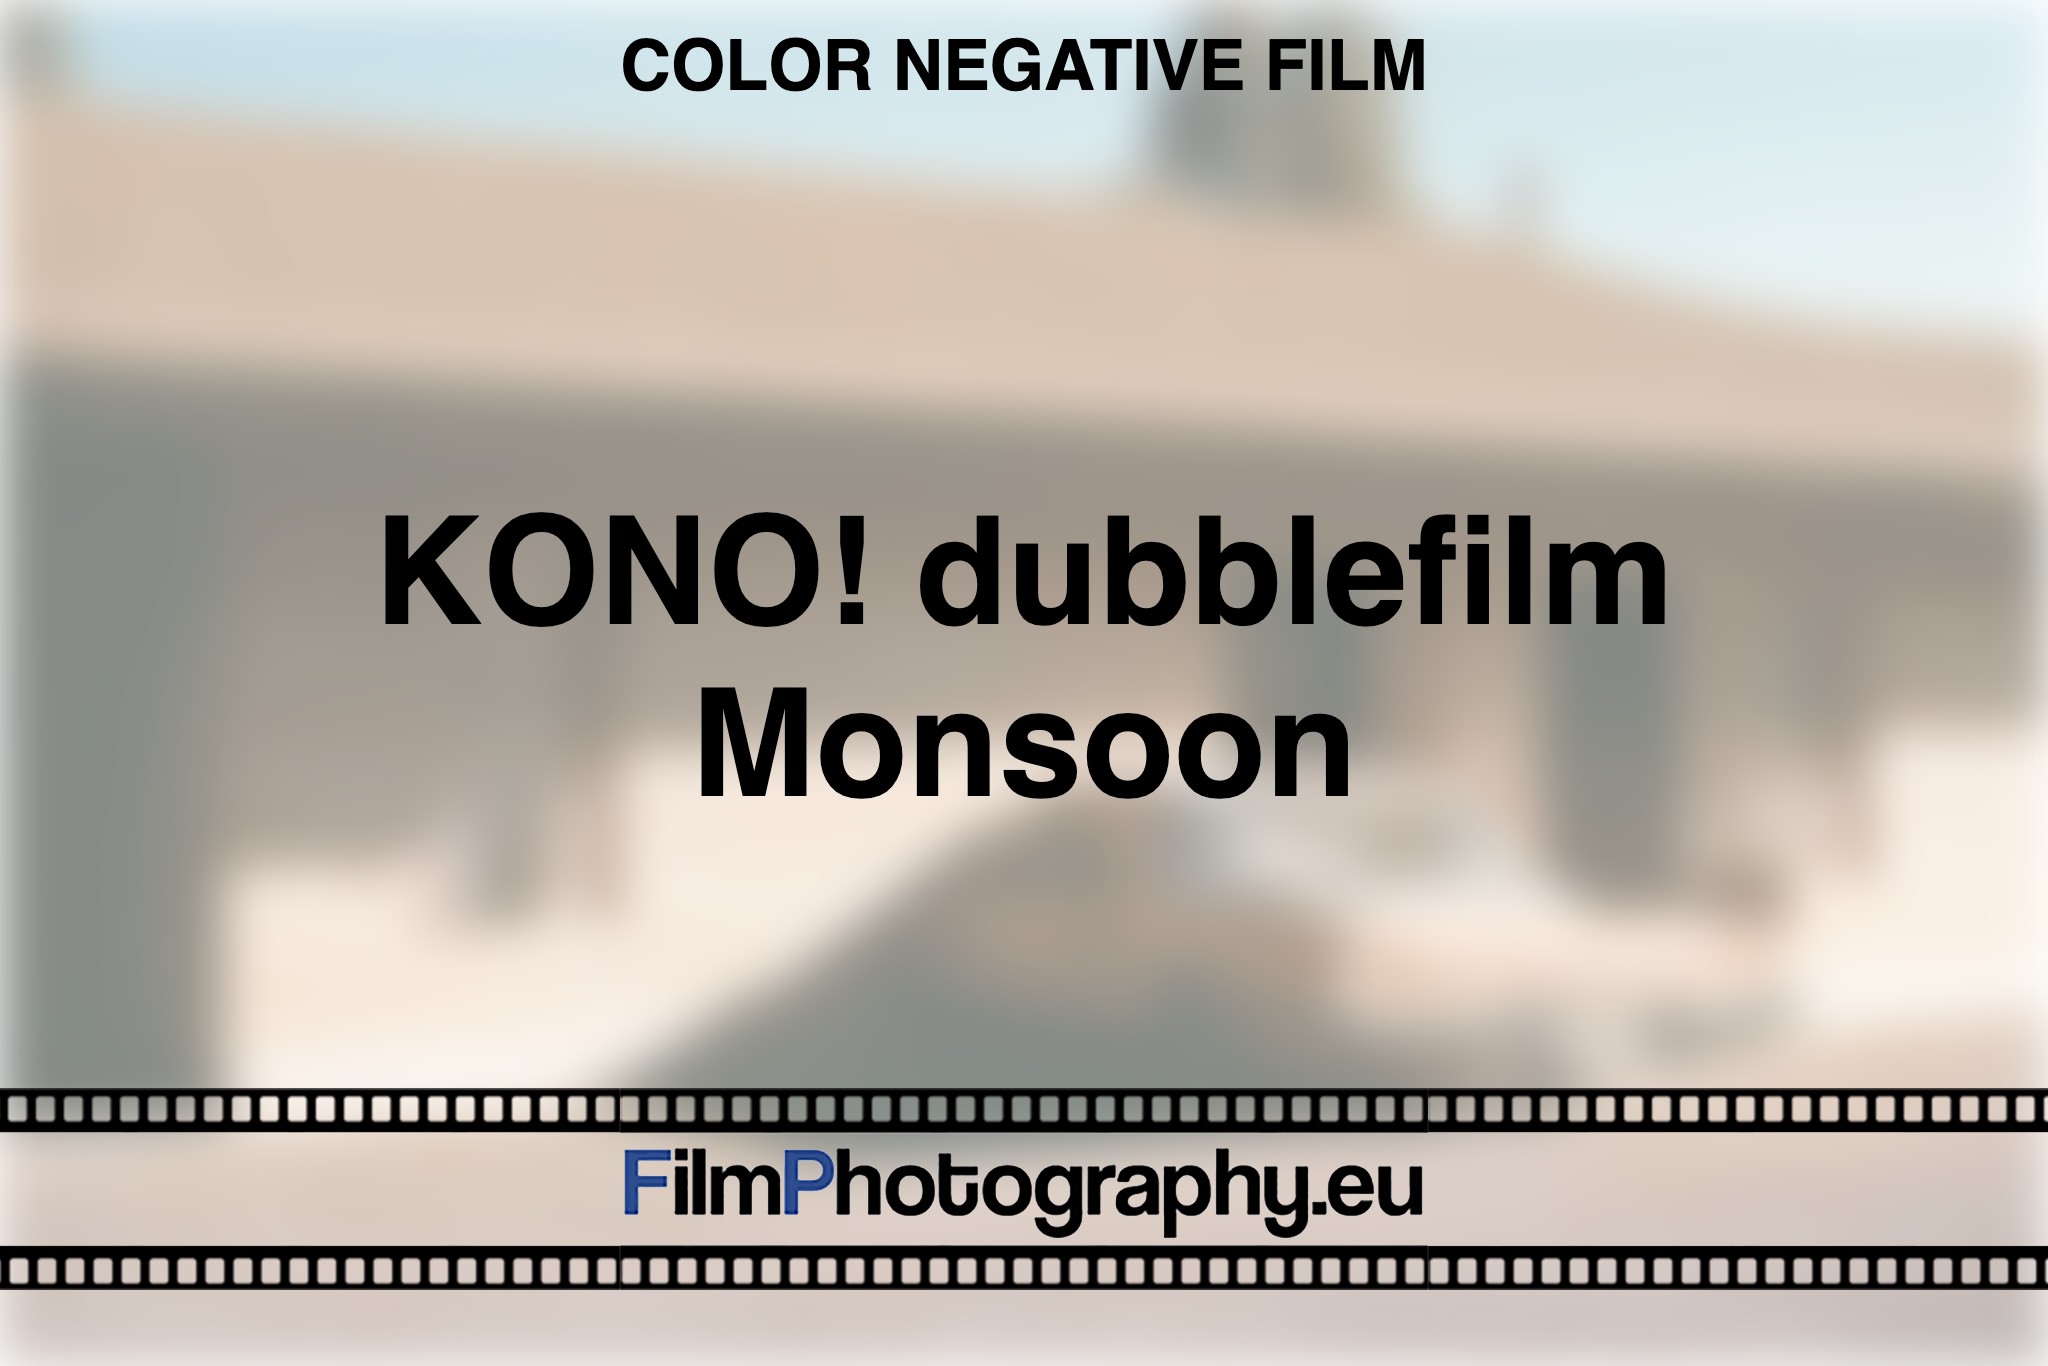 kono-dubblefilm-monsoon-color-negative-film-bnv